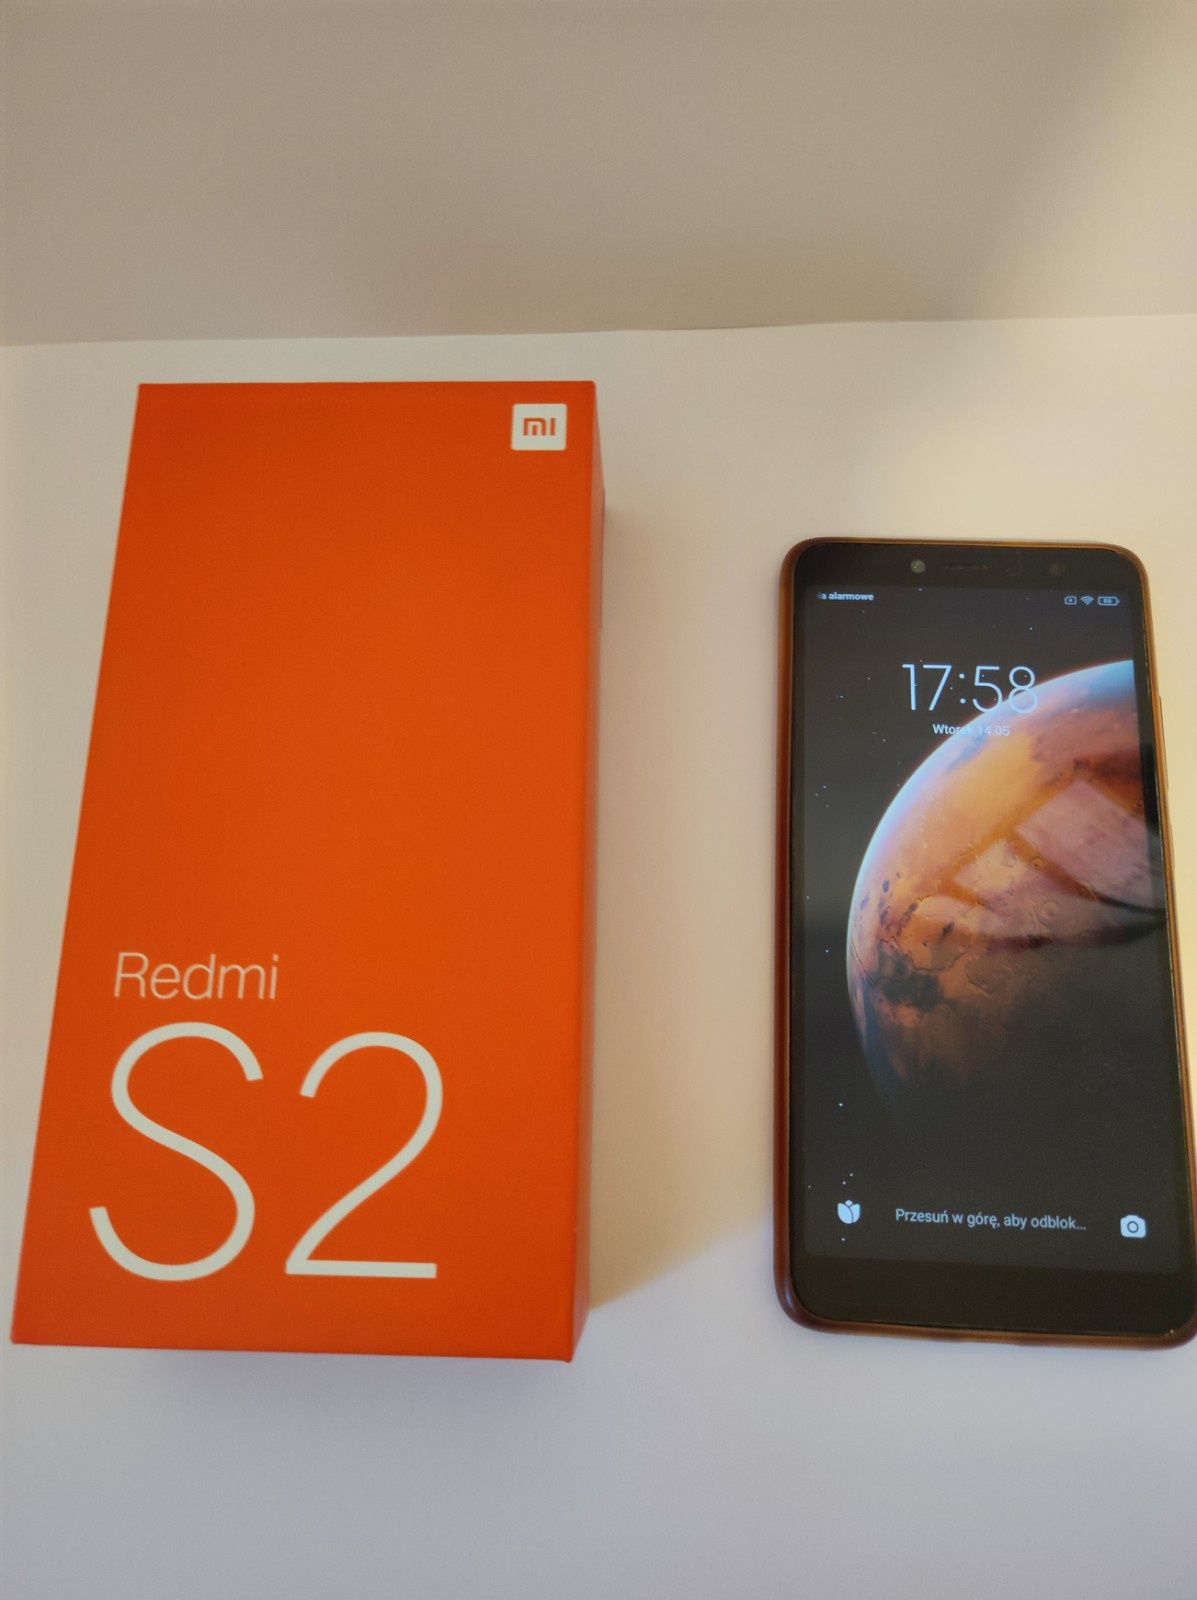 Smartfon Xiaomi Redmi S2 3 GB / 32 GB 4G (LTE) szary